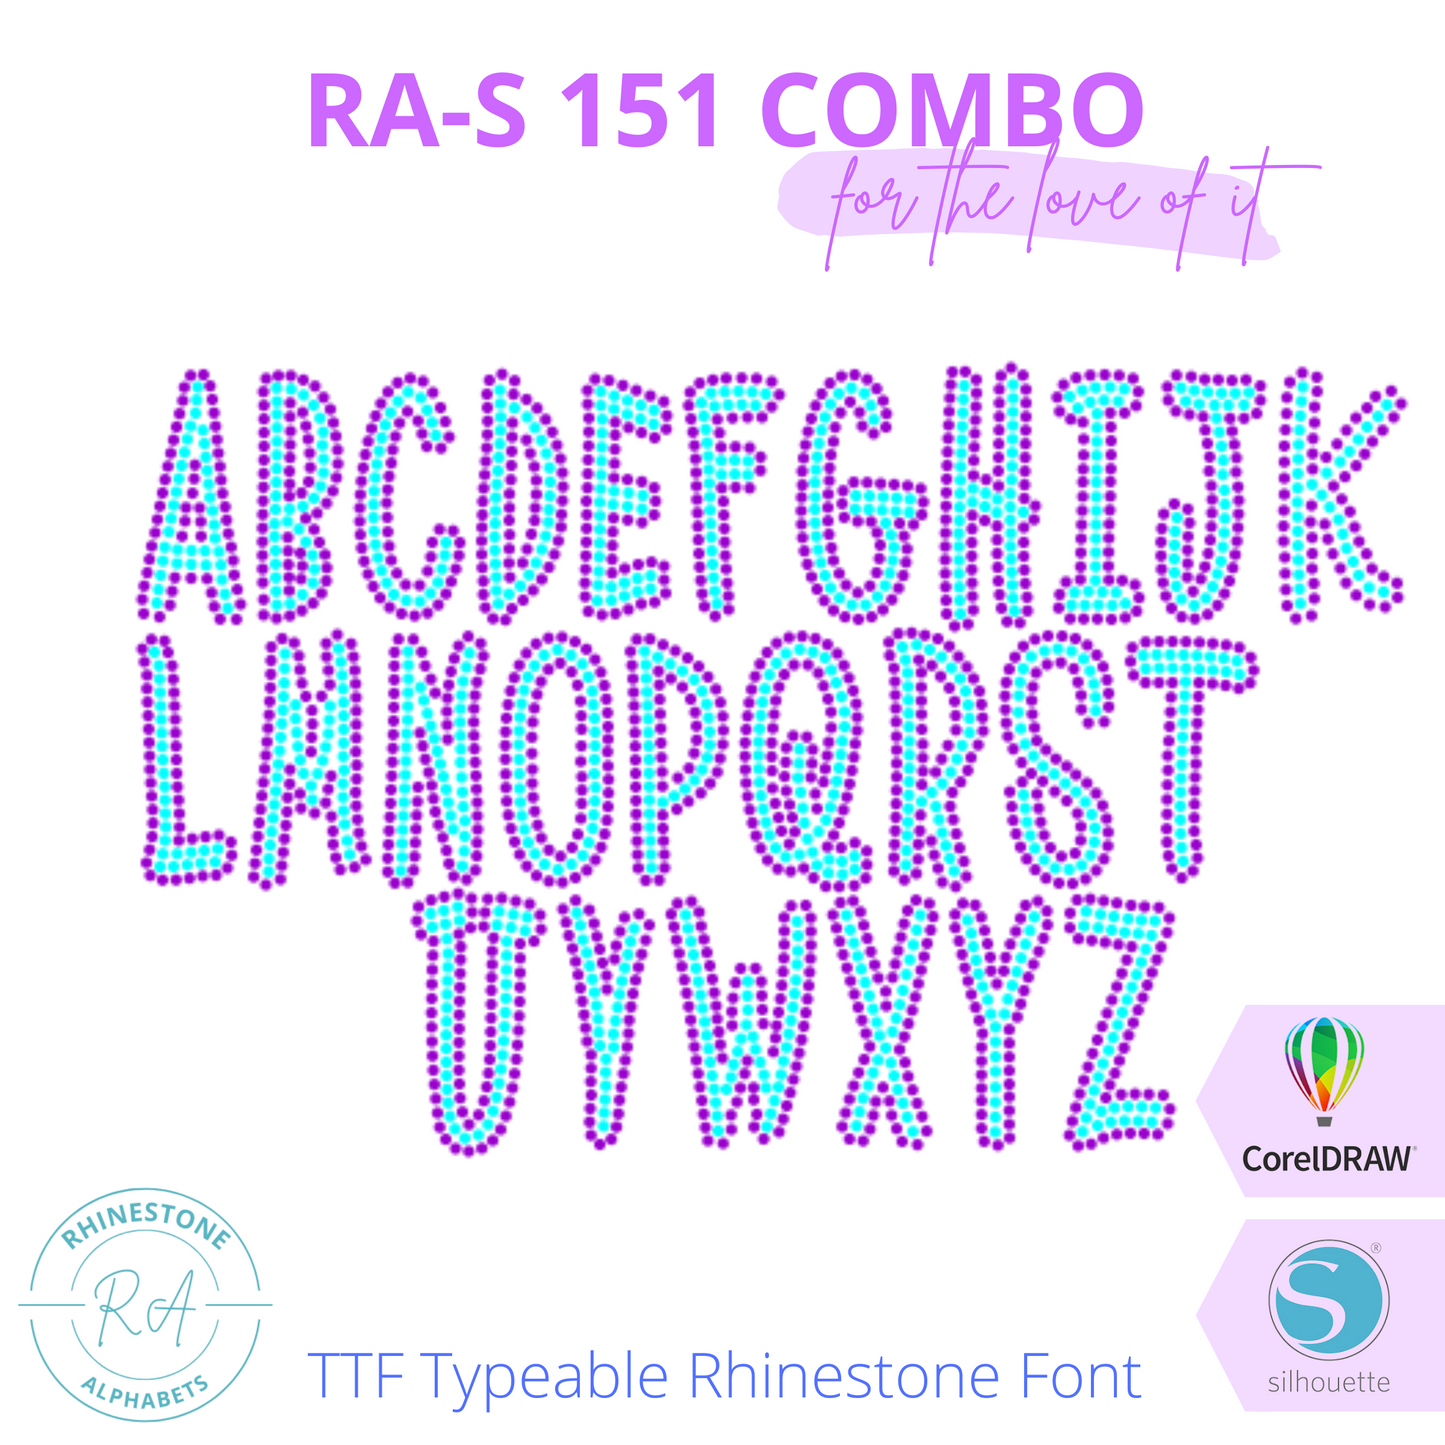 RA-S 151 Combo - RhinestoneAlphabets